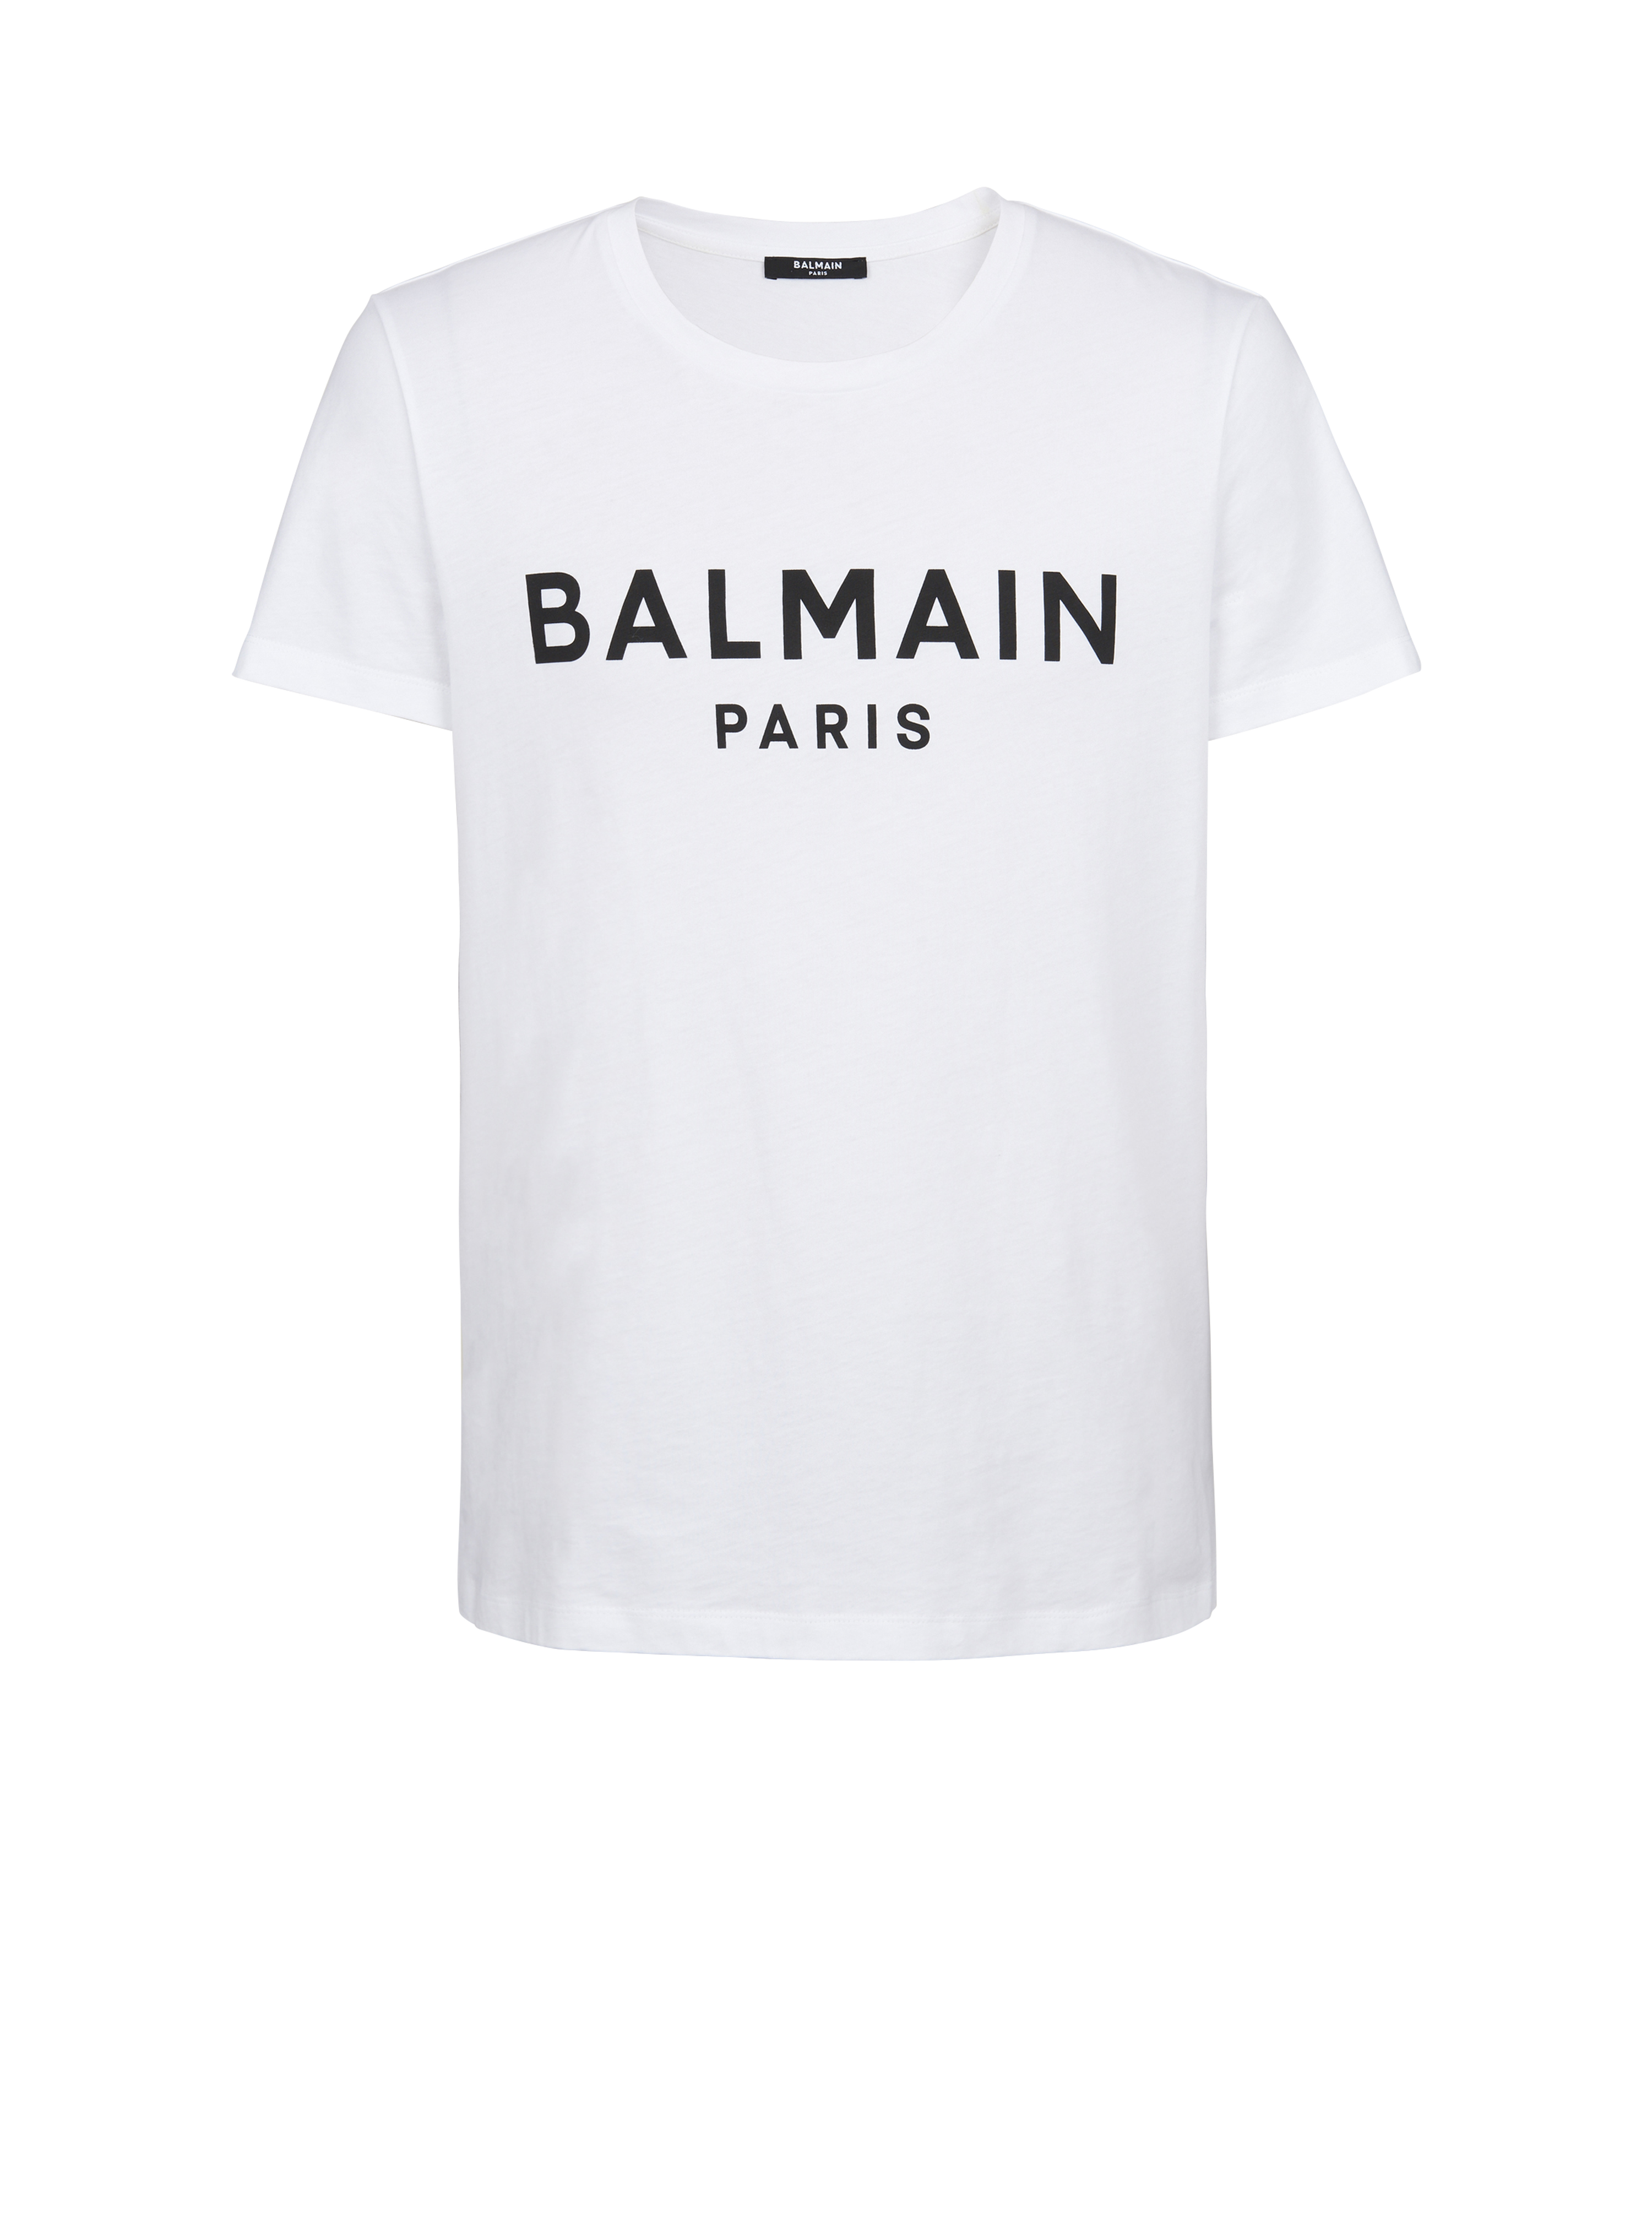 Balmain巴尔曼标志印花环保设计棉质T恤, white